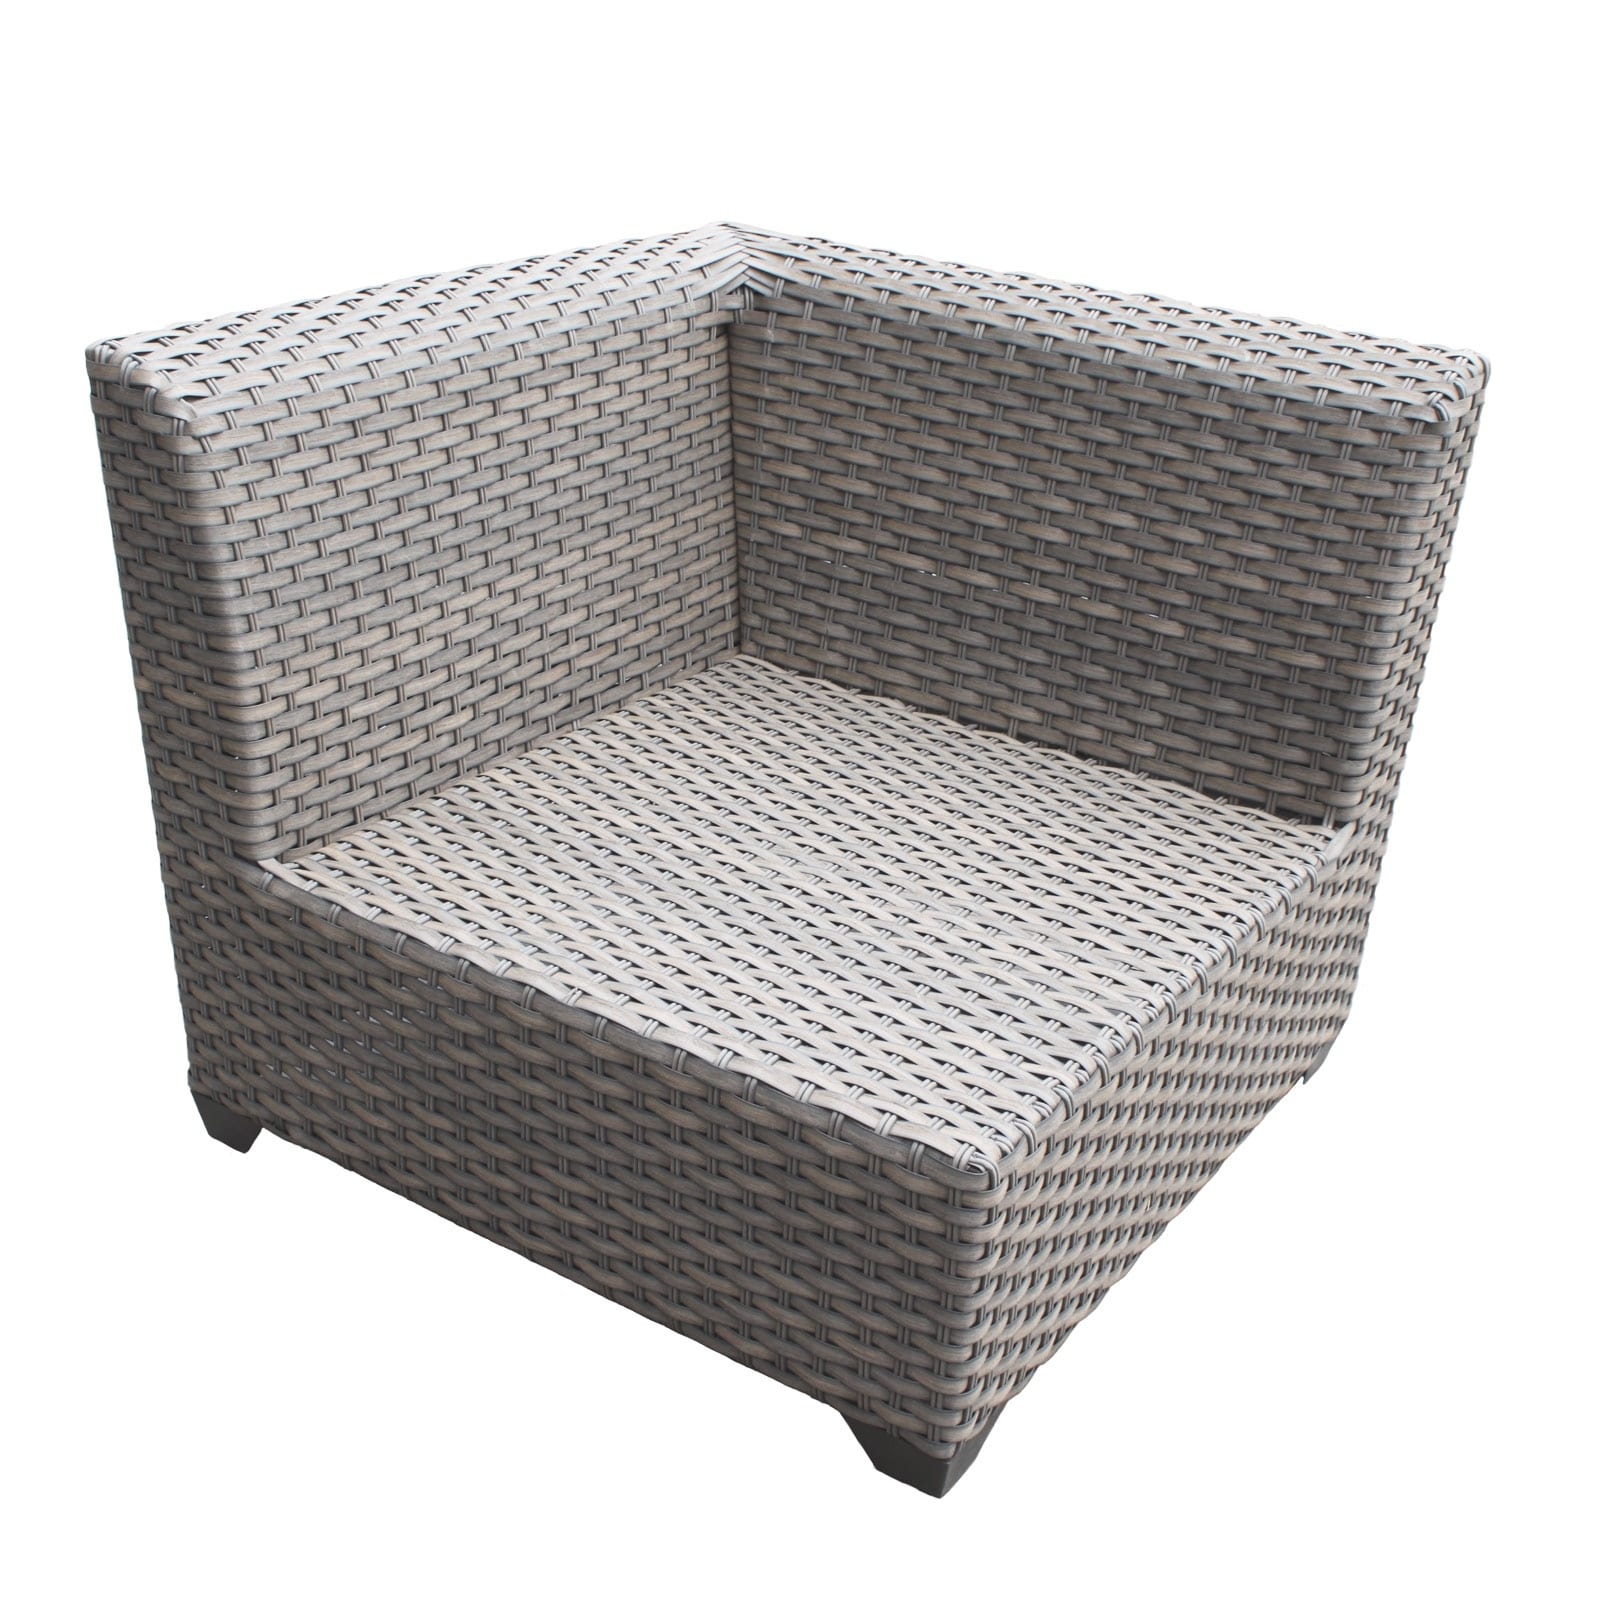 TK Classics Florence 6-Piece Wicker Patio Sofa Set in Gray - image 5 of 5